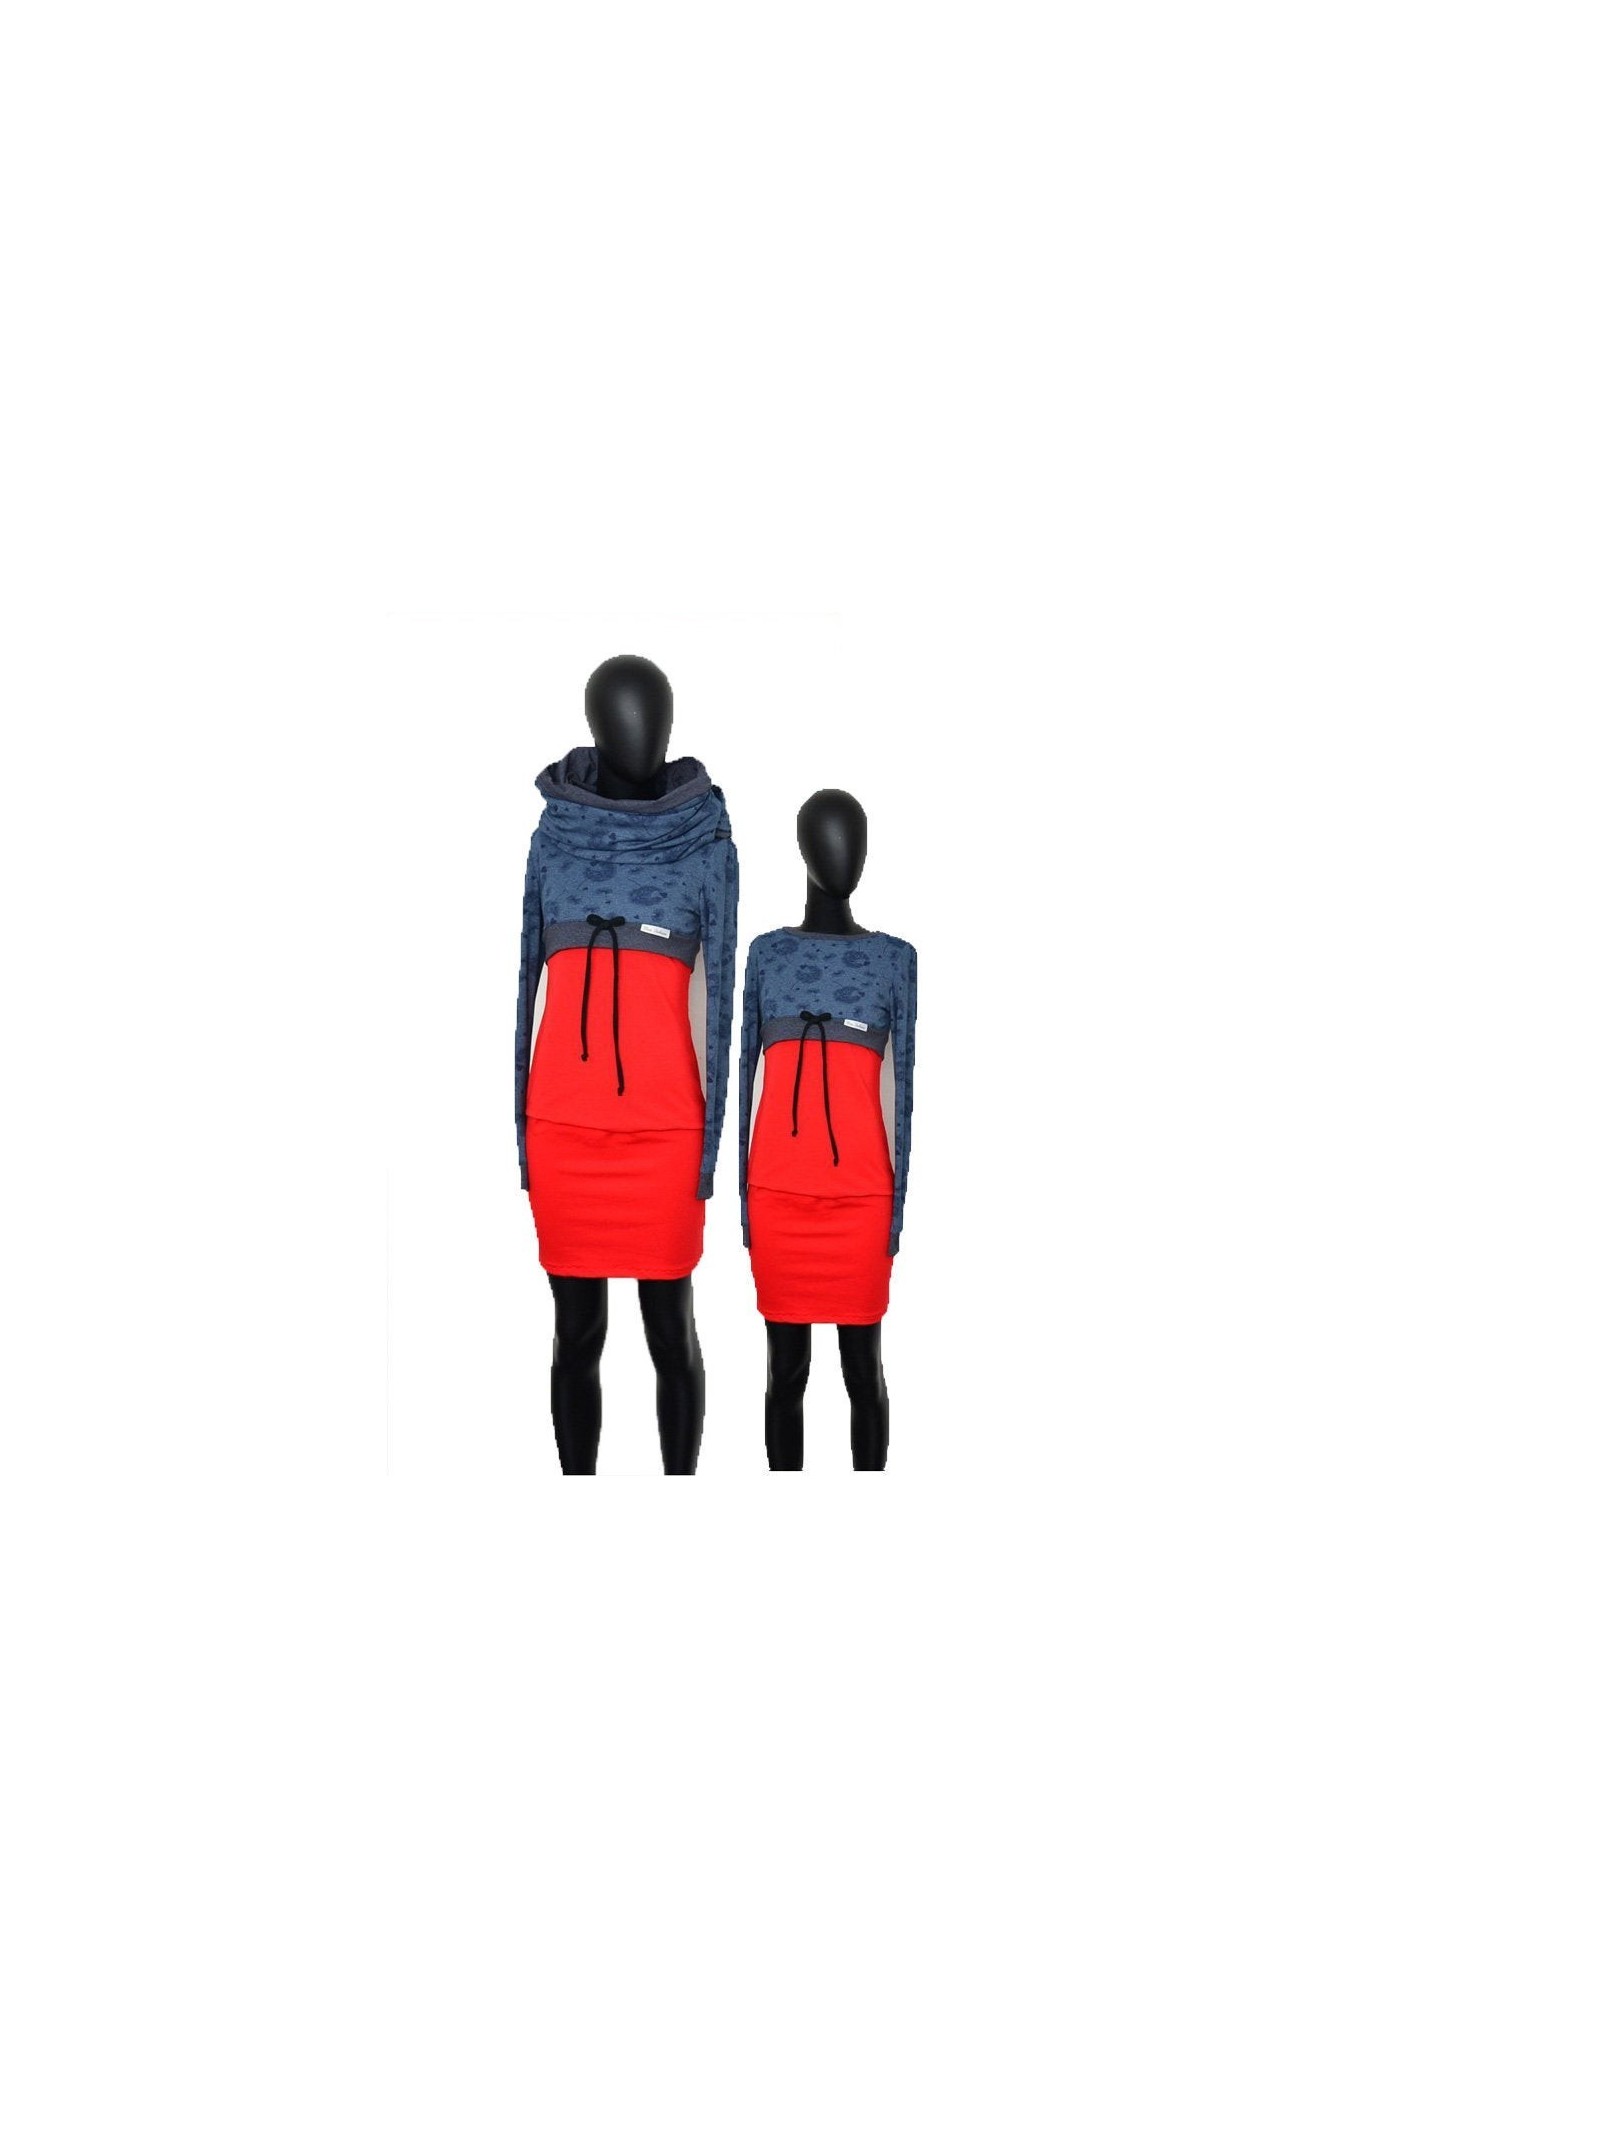 A1- Iza Fabian SET + KLEID + LOOP - rot blau blumen damen kleider